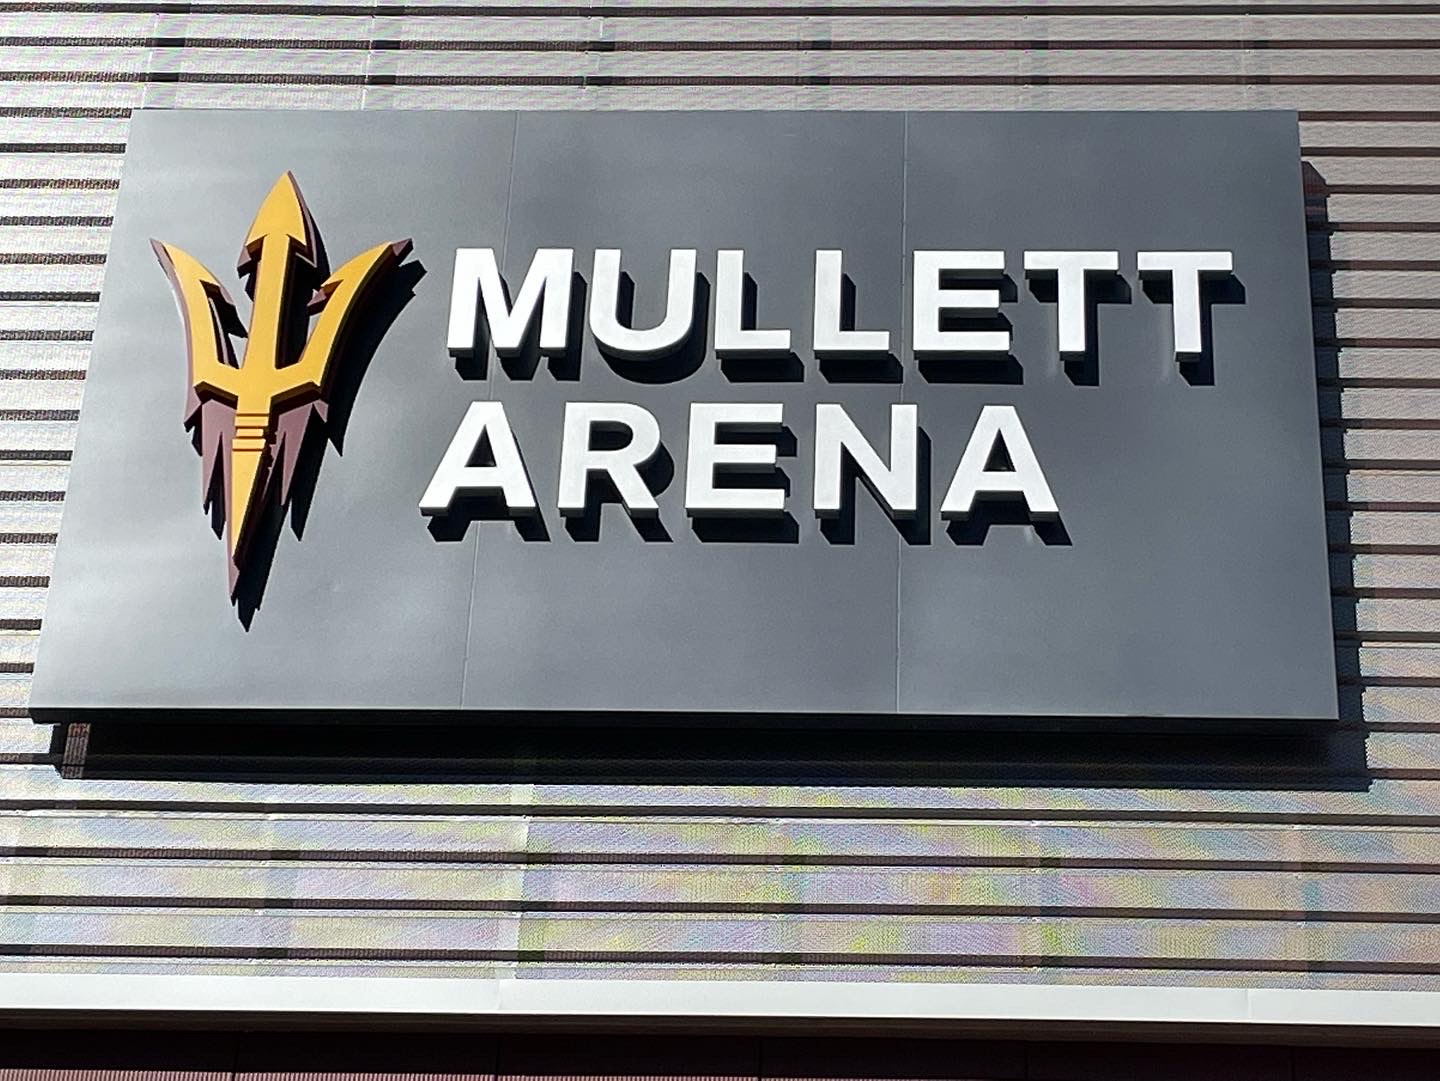 Mullett Arena a success for Arizona Coyotes on 1st night despite